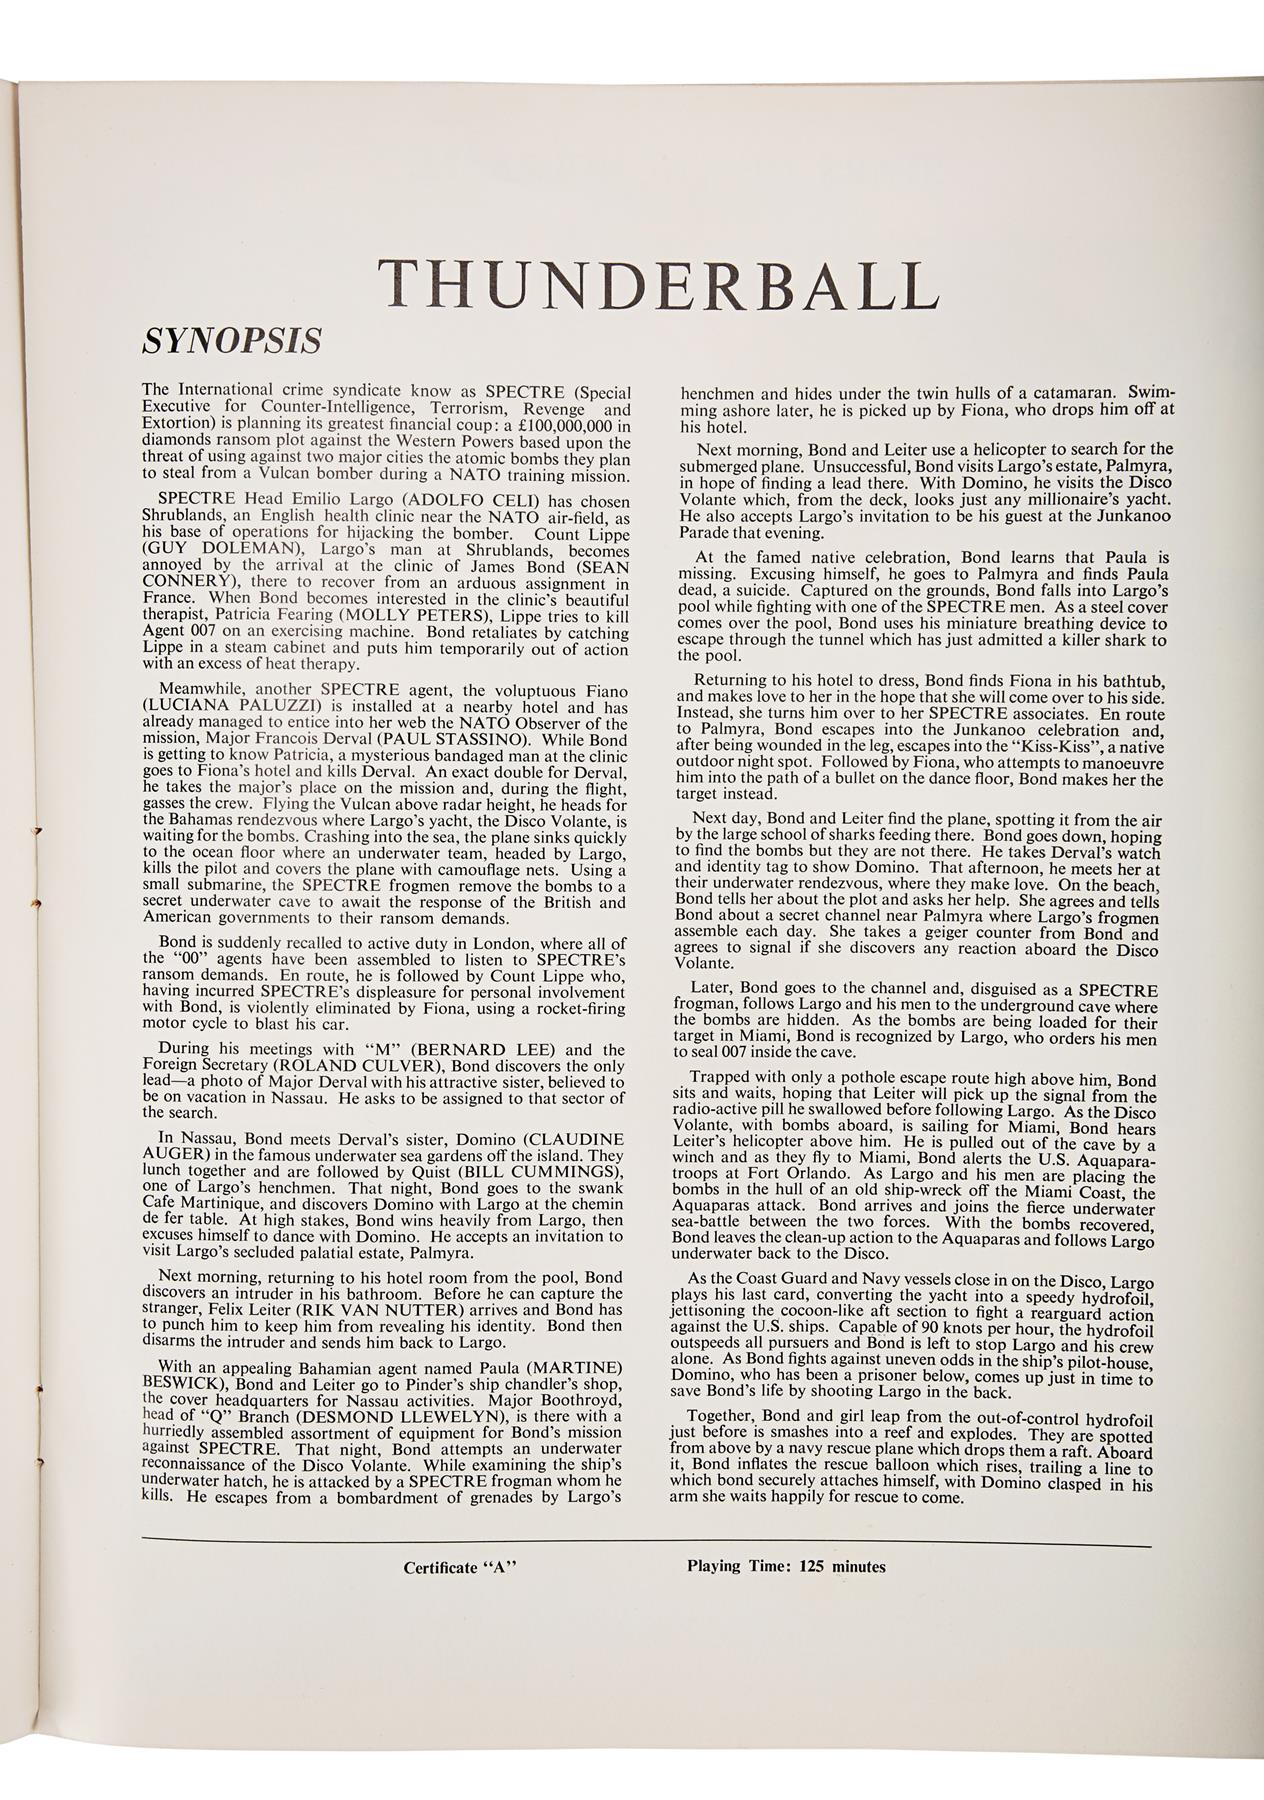 THUNDERBALL (1965) - Birmingham Regional Premiere Programme, 1965 - Image 3 of 5